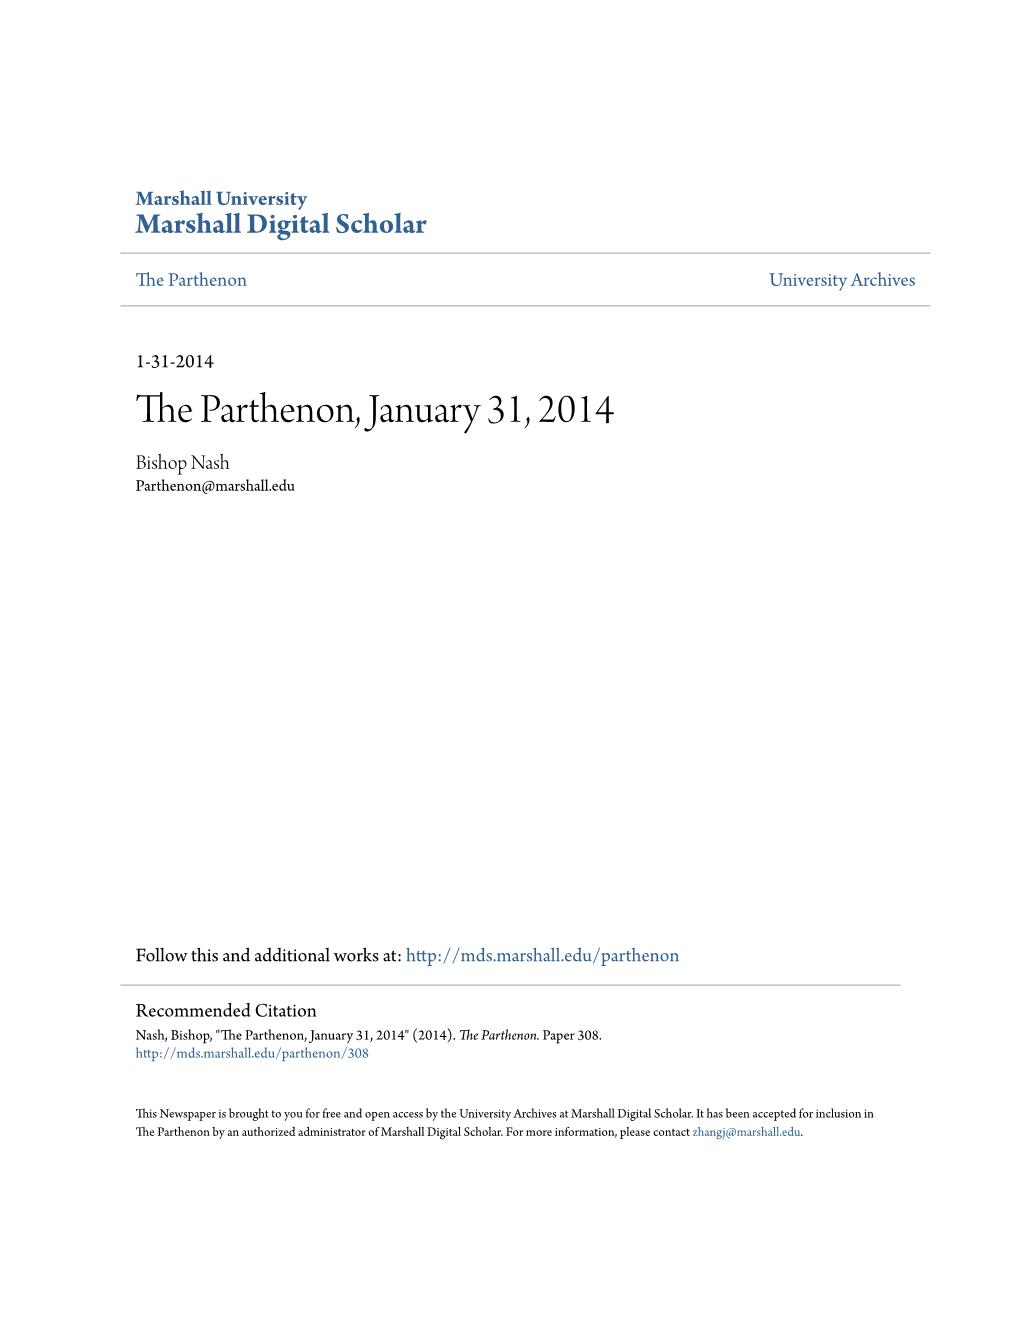 The Parthenon, January 31, 2014